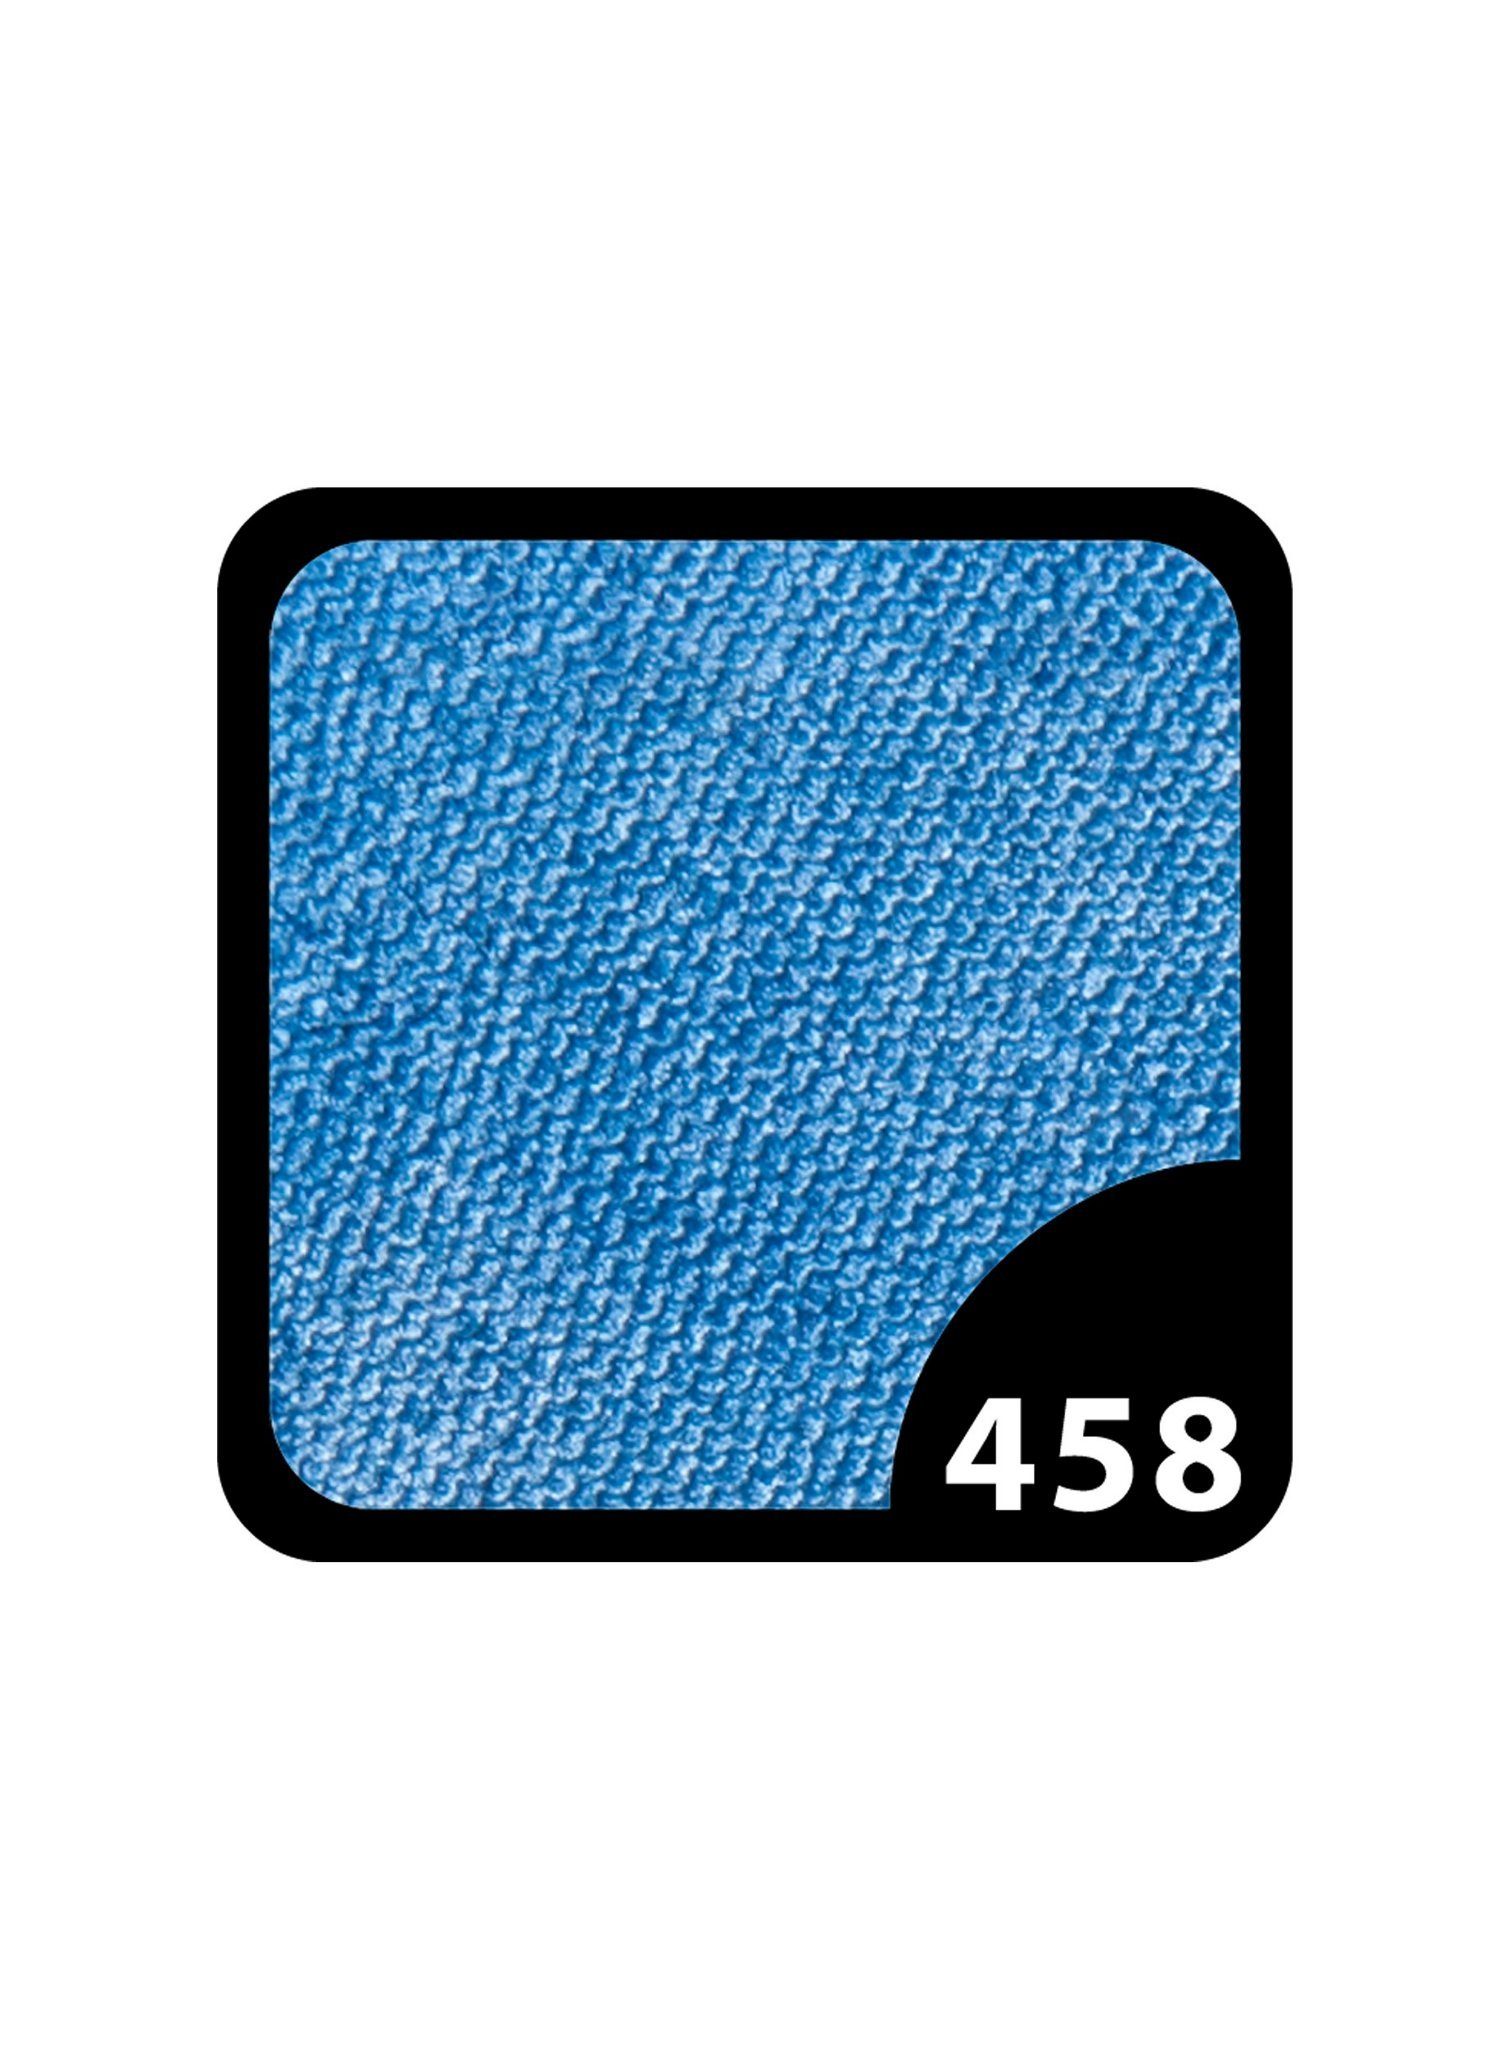 Maskworld Theaterschminke aqua make-up hellblau metallic Aquamarin Wassersch, 40